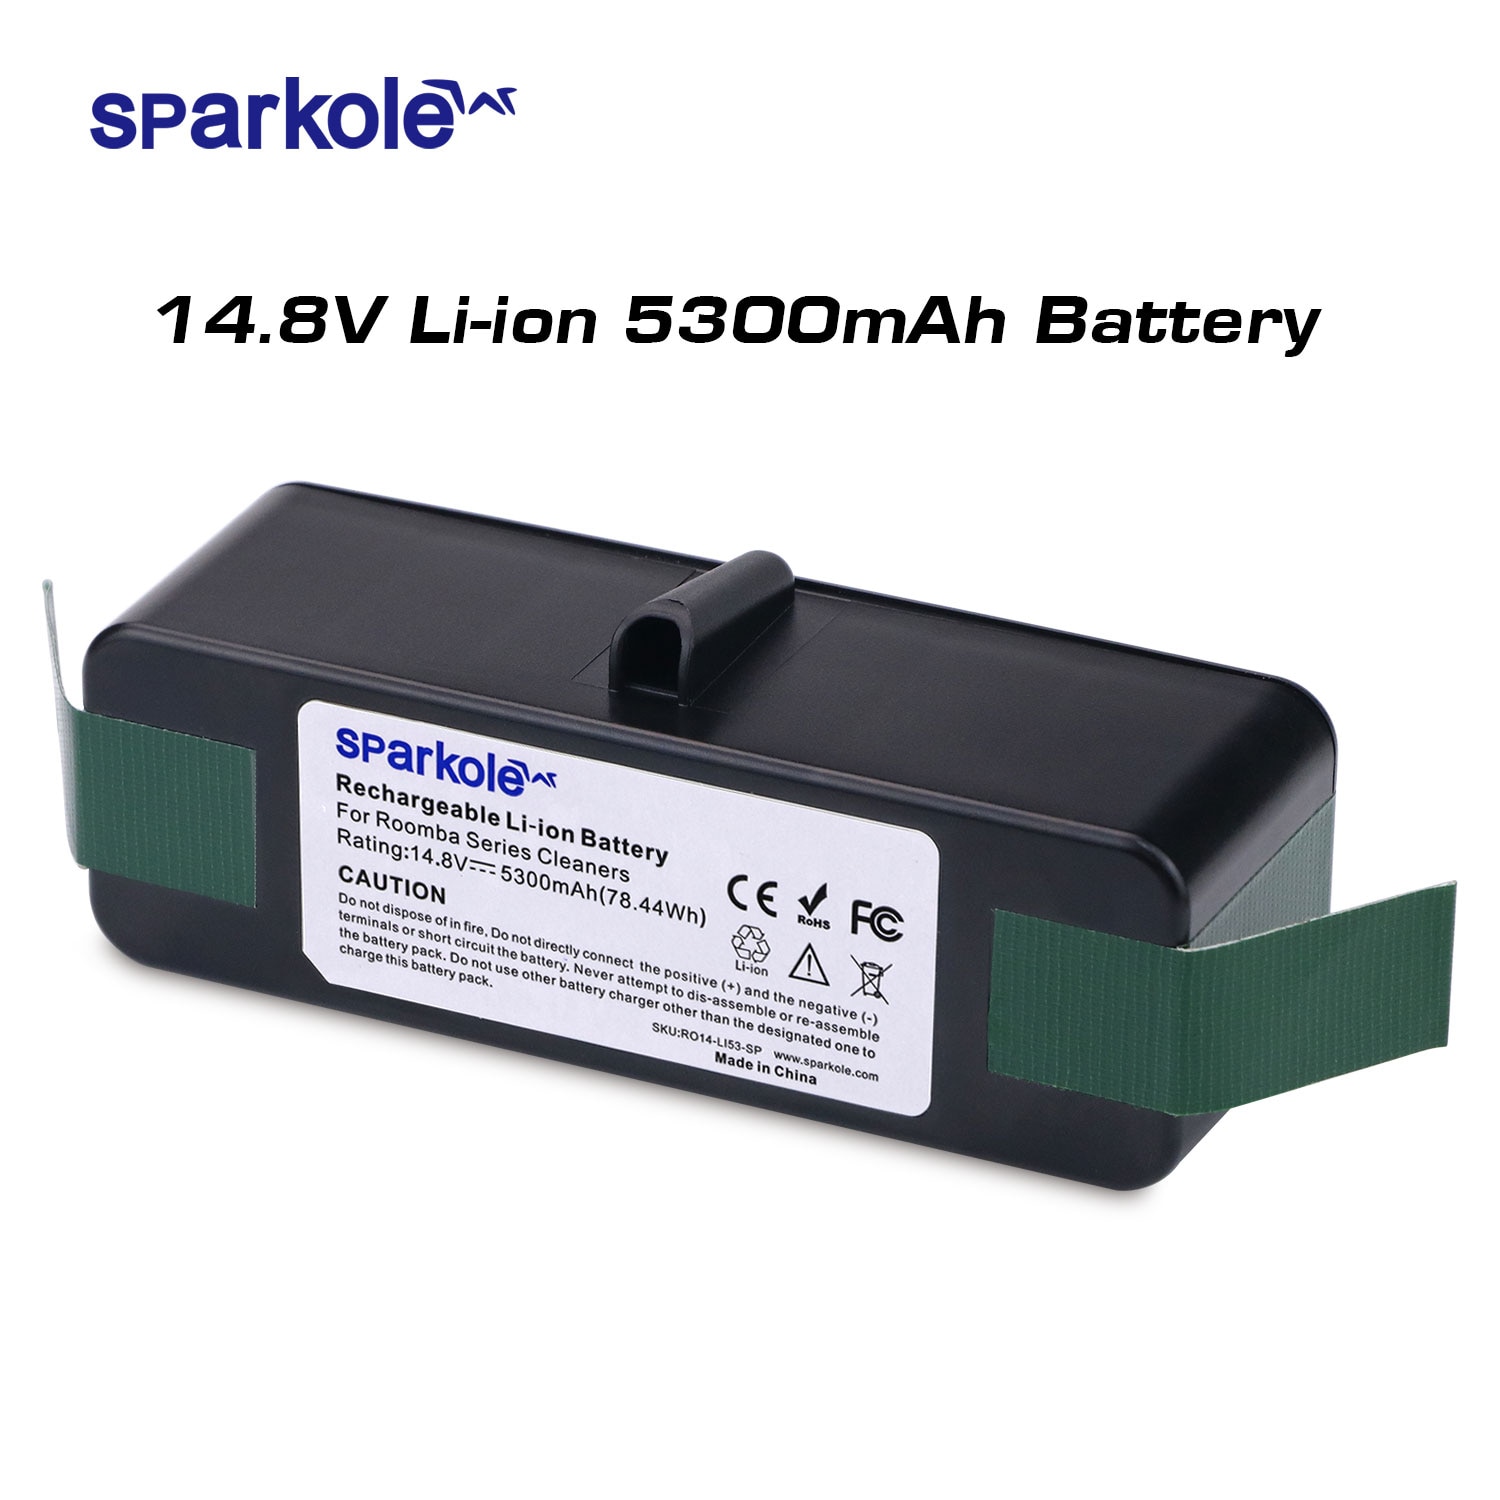 Sparkole 5.3 Ah 14.8V Li-ion Battery for iRobot Roomba 500 600 700 800 Series 555 560 580 620 630 650 760 770 780 790 870 880 R3